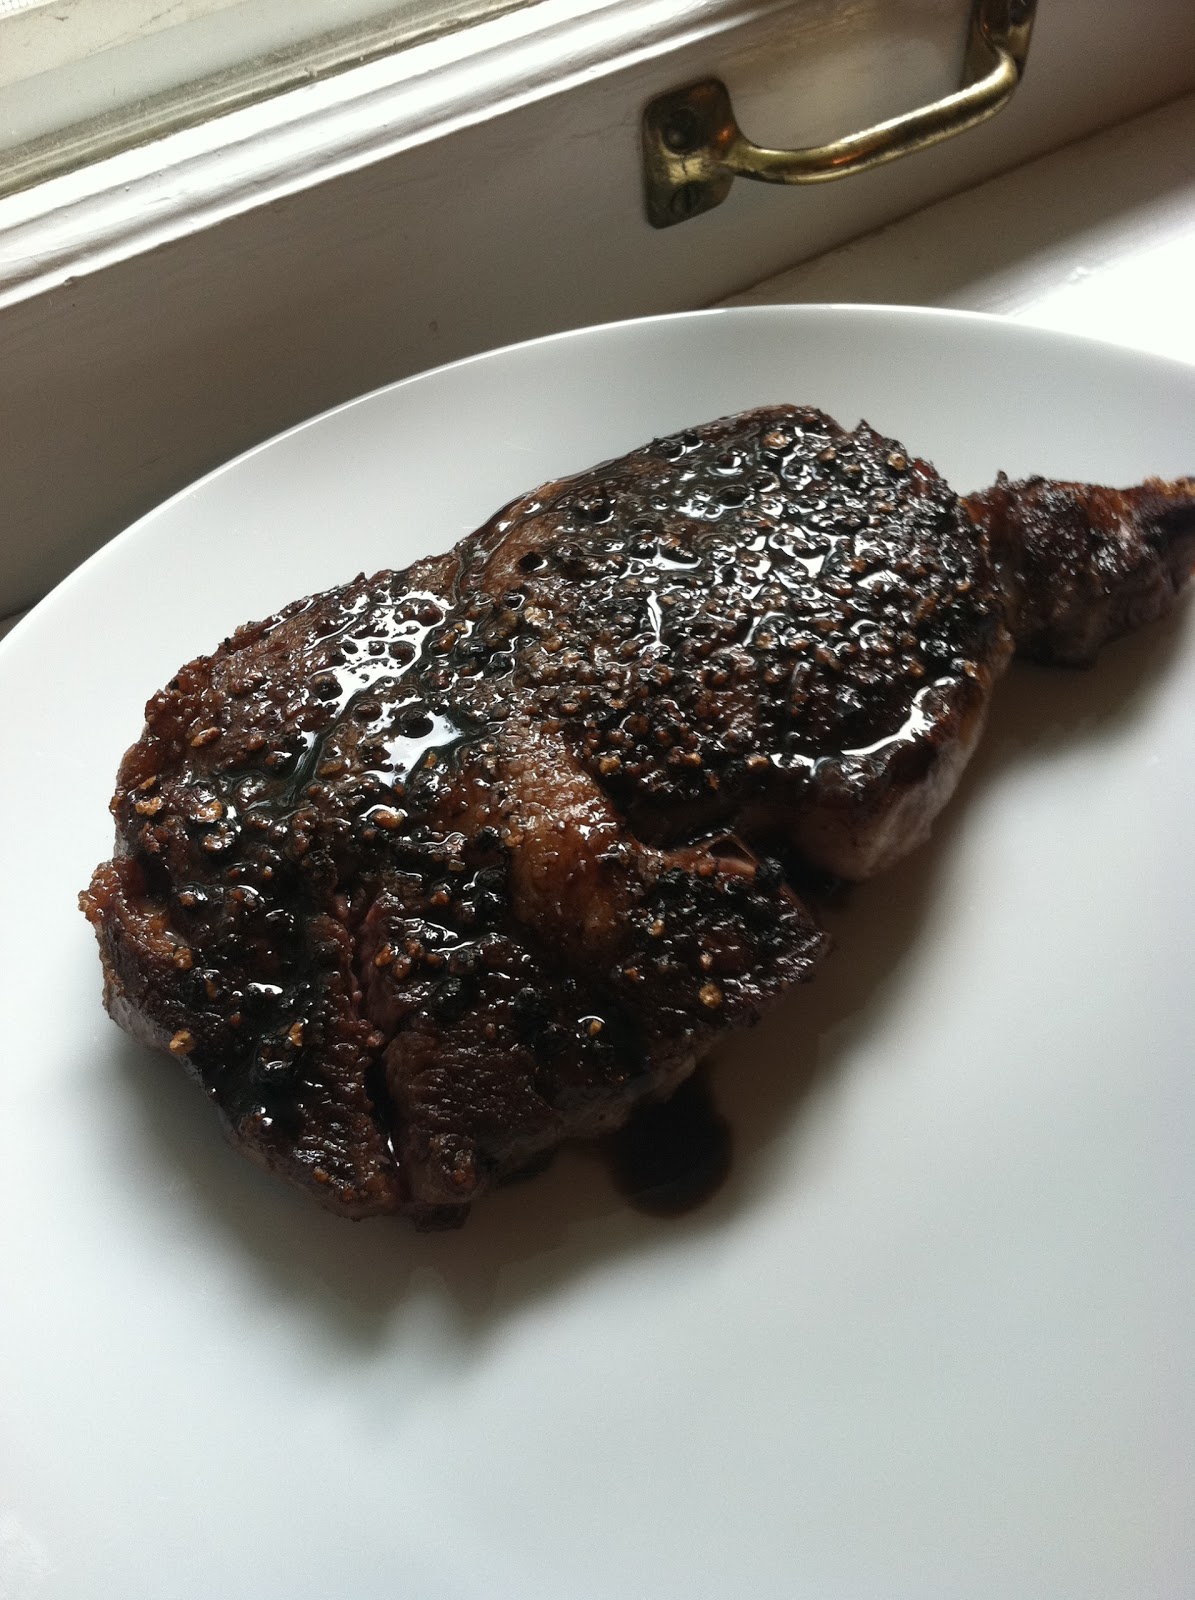 Balsamic Reduction Sauce Recipe For Steak